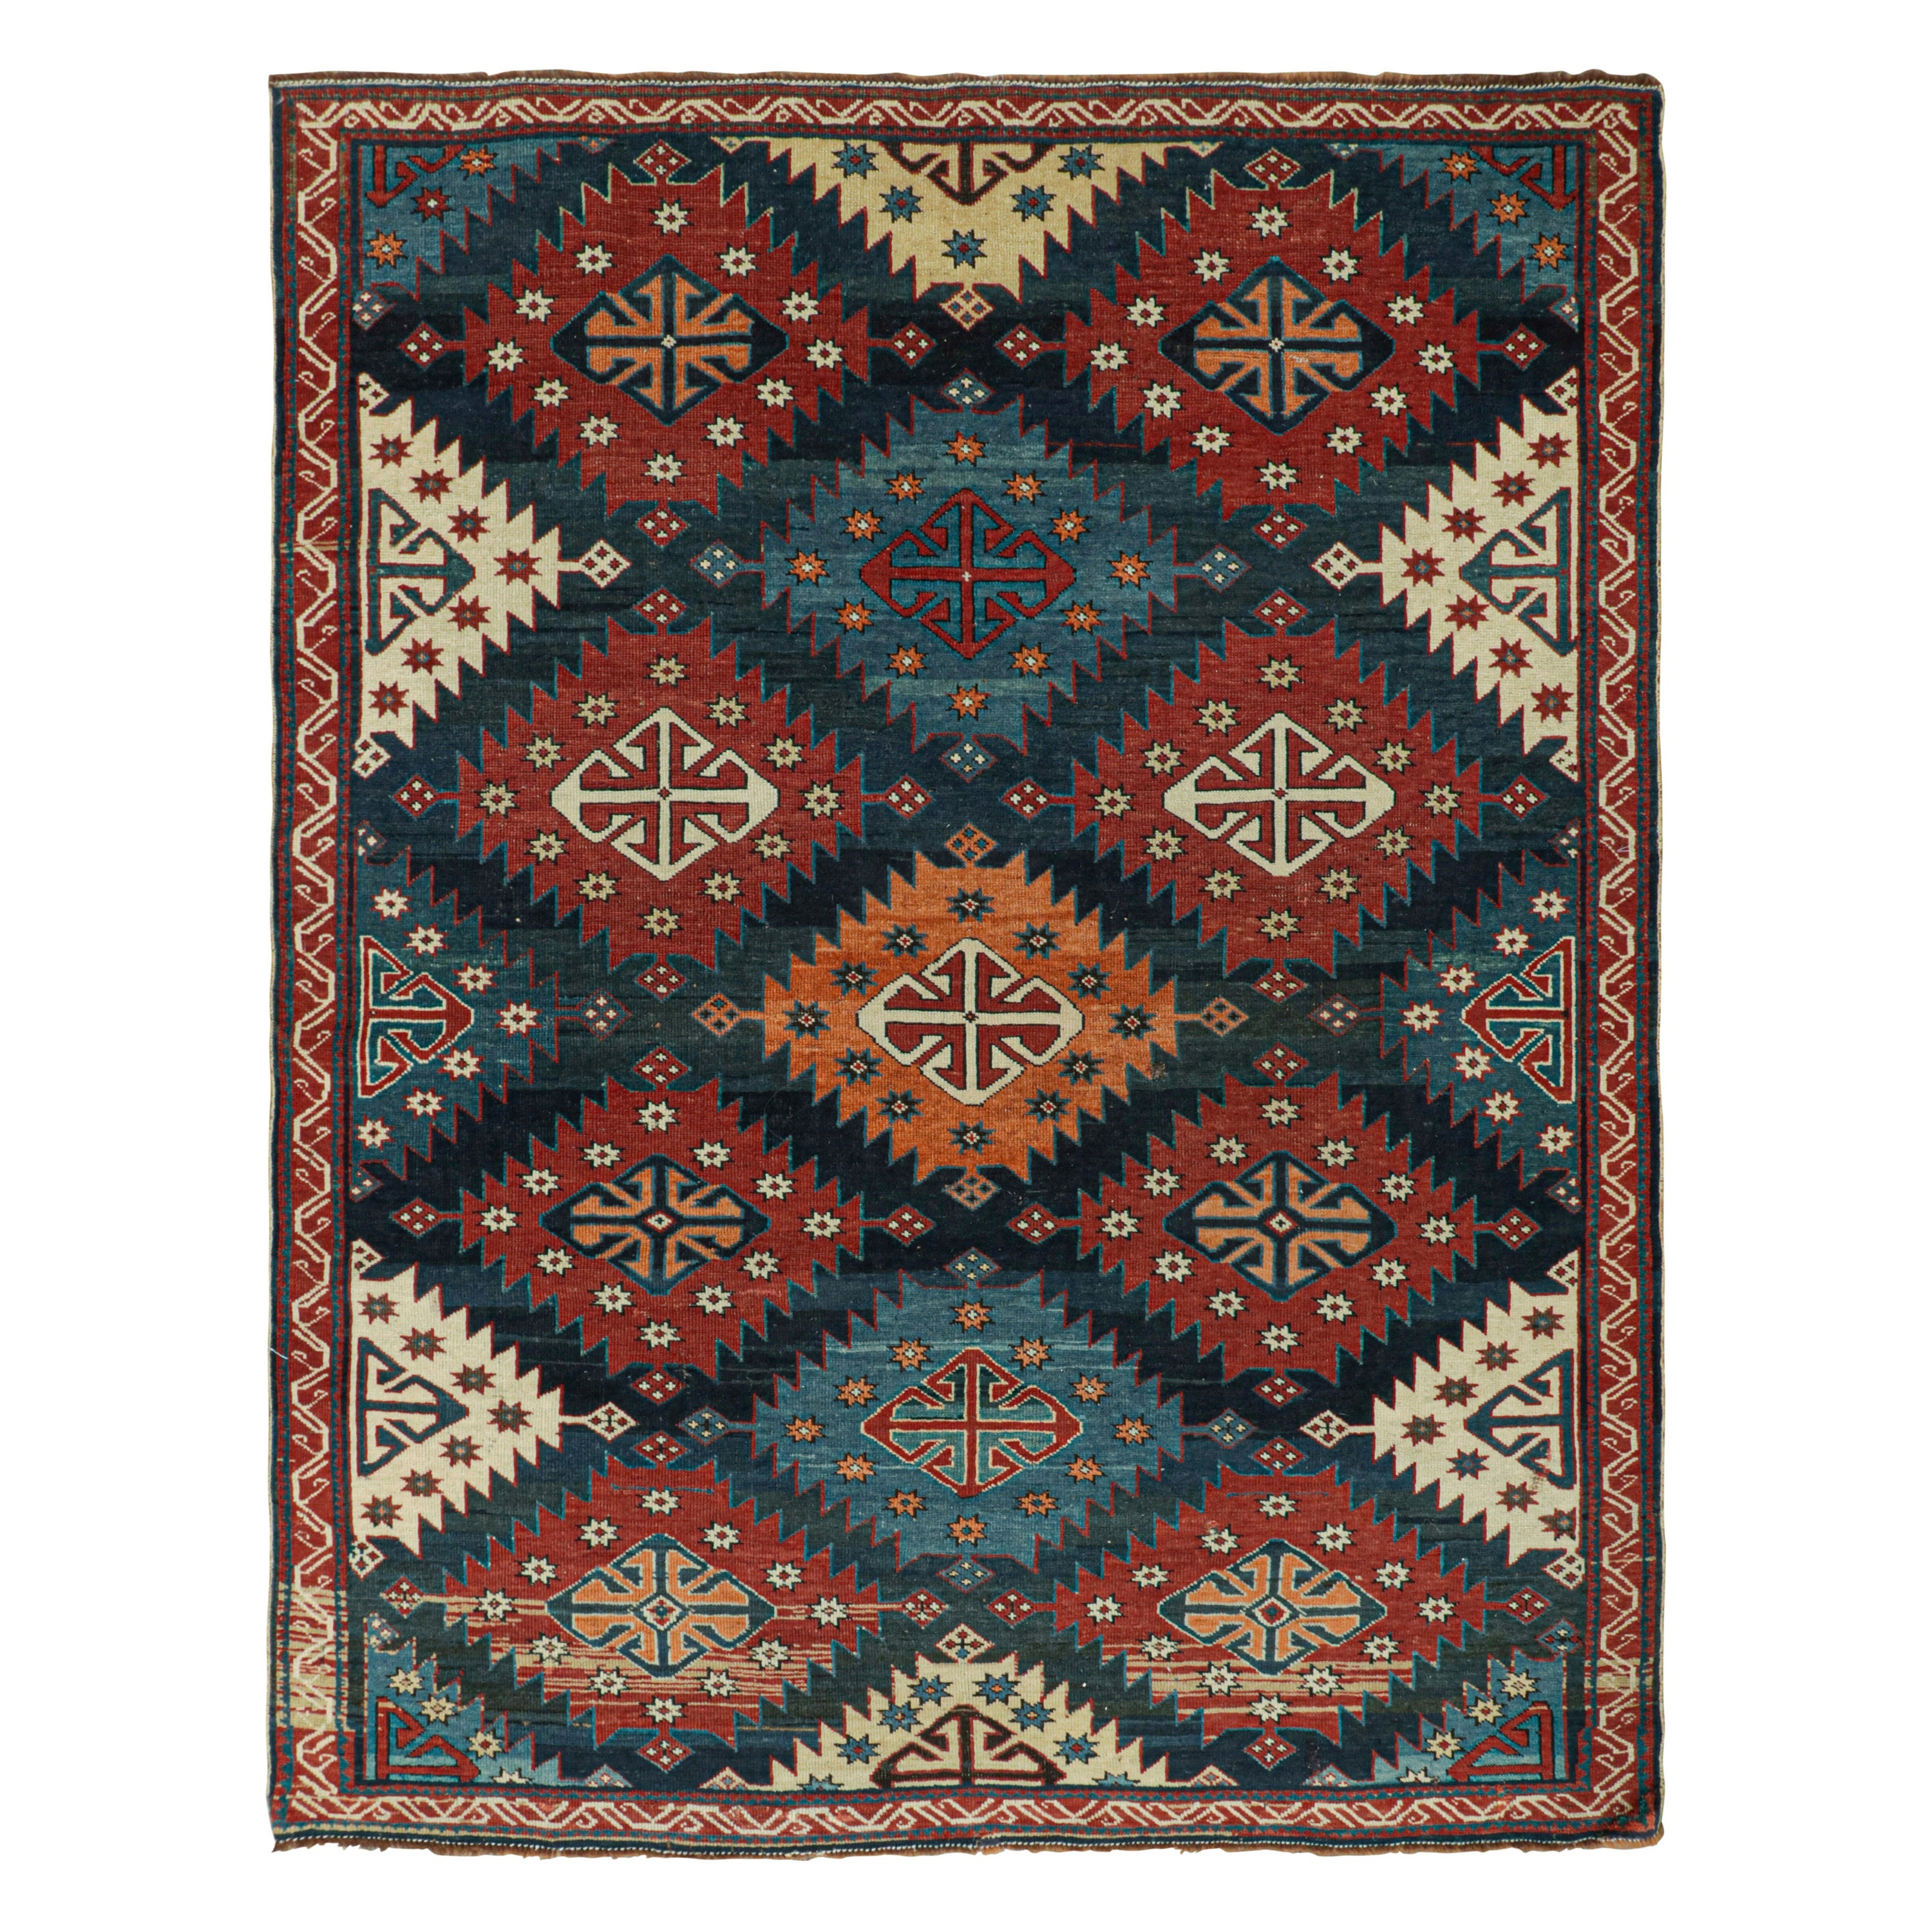 Antique Caucasian Kazak Rug in Red & Blue Tribal Patterns from Rug & Kilim